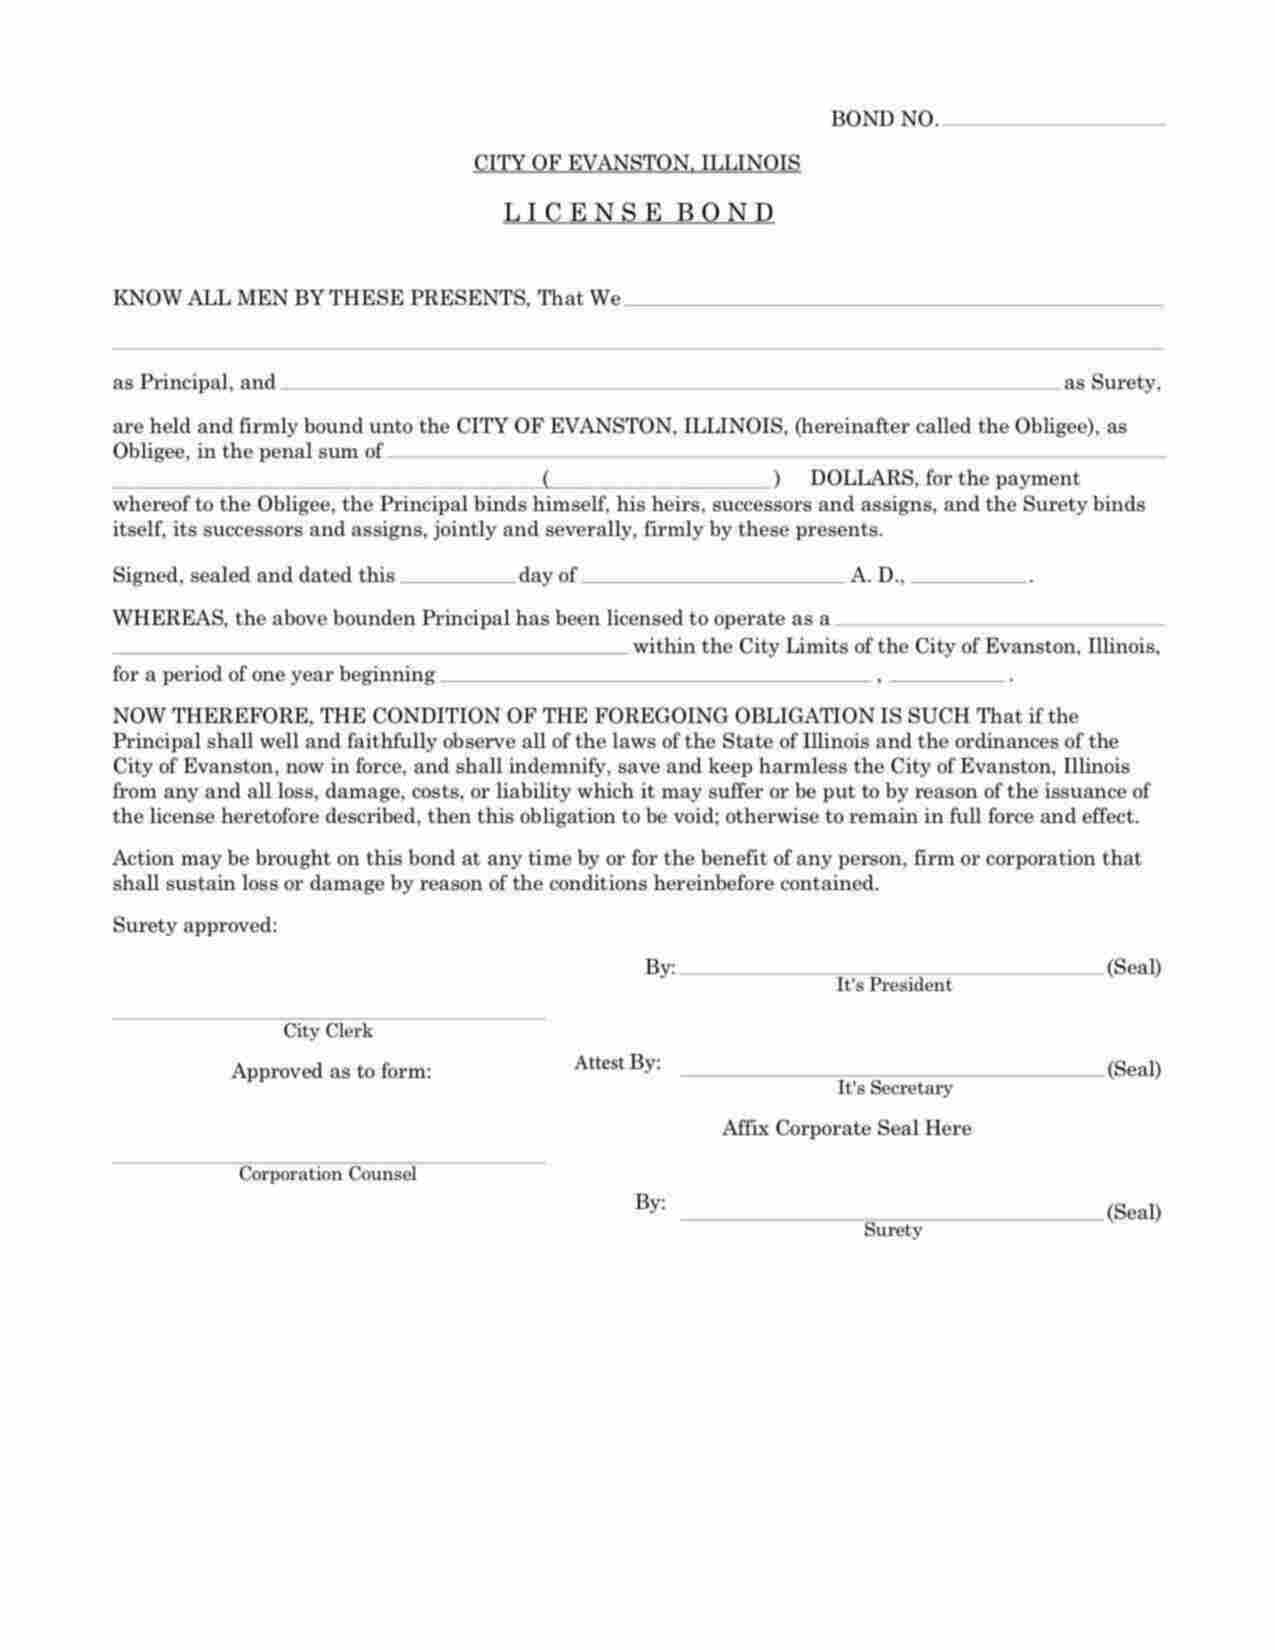 Illinois License/Permit Bond Form